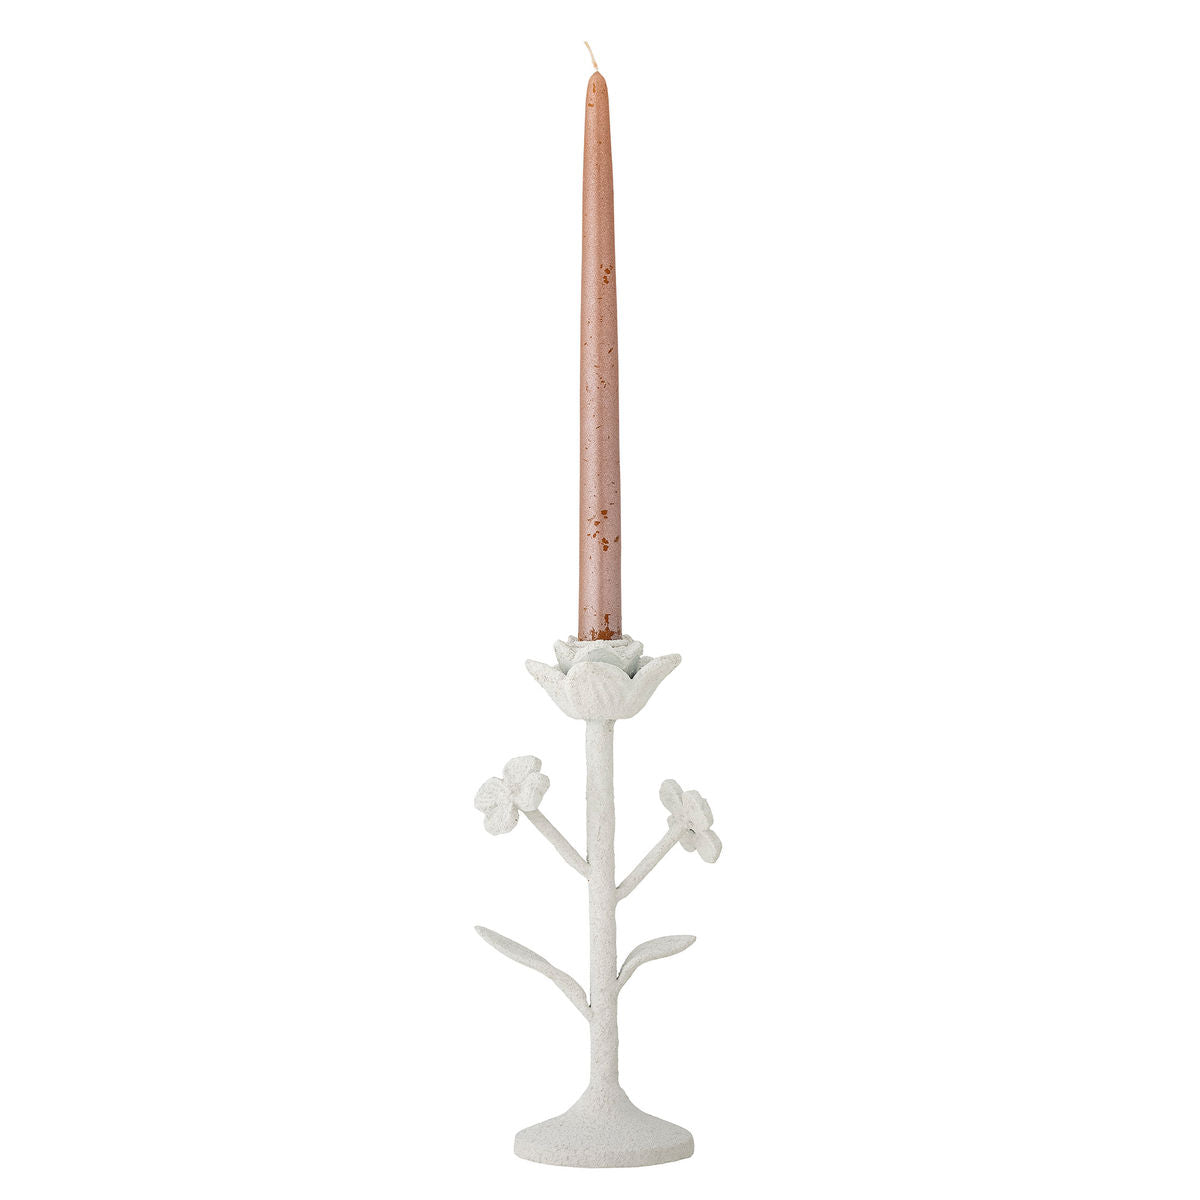 Creative Collection Ranin Candlestick, White, Iron